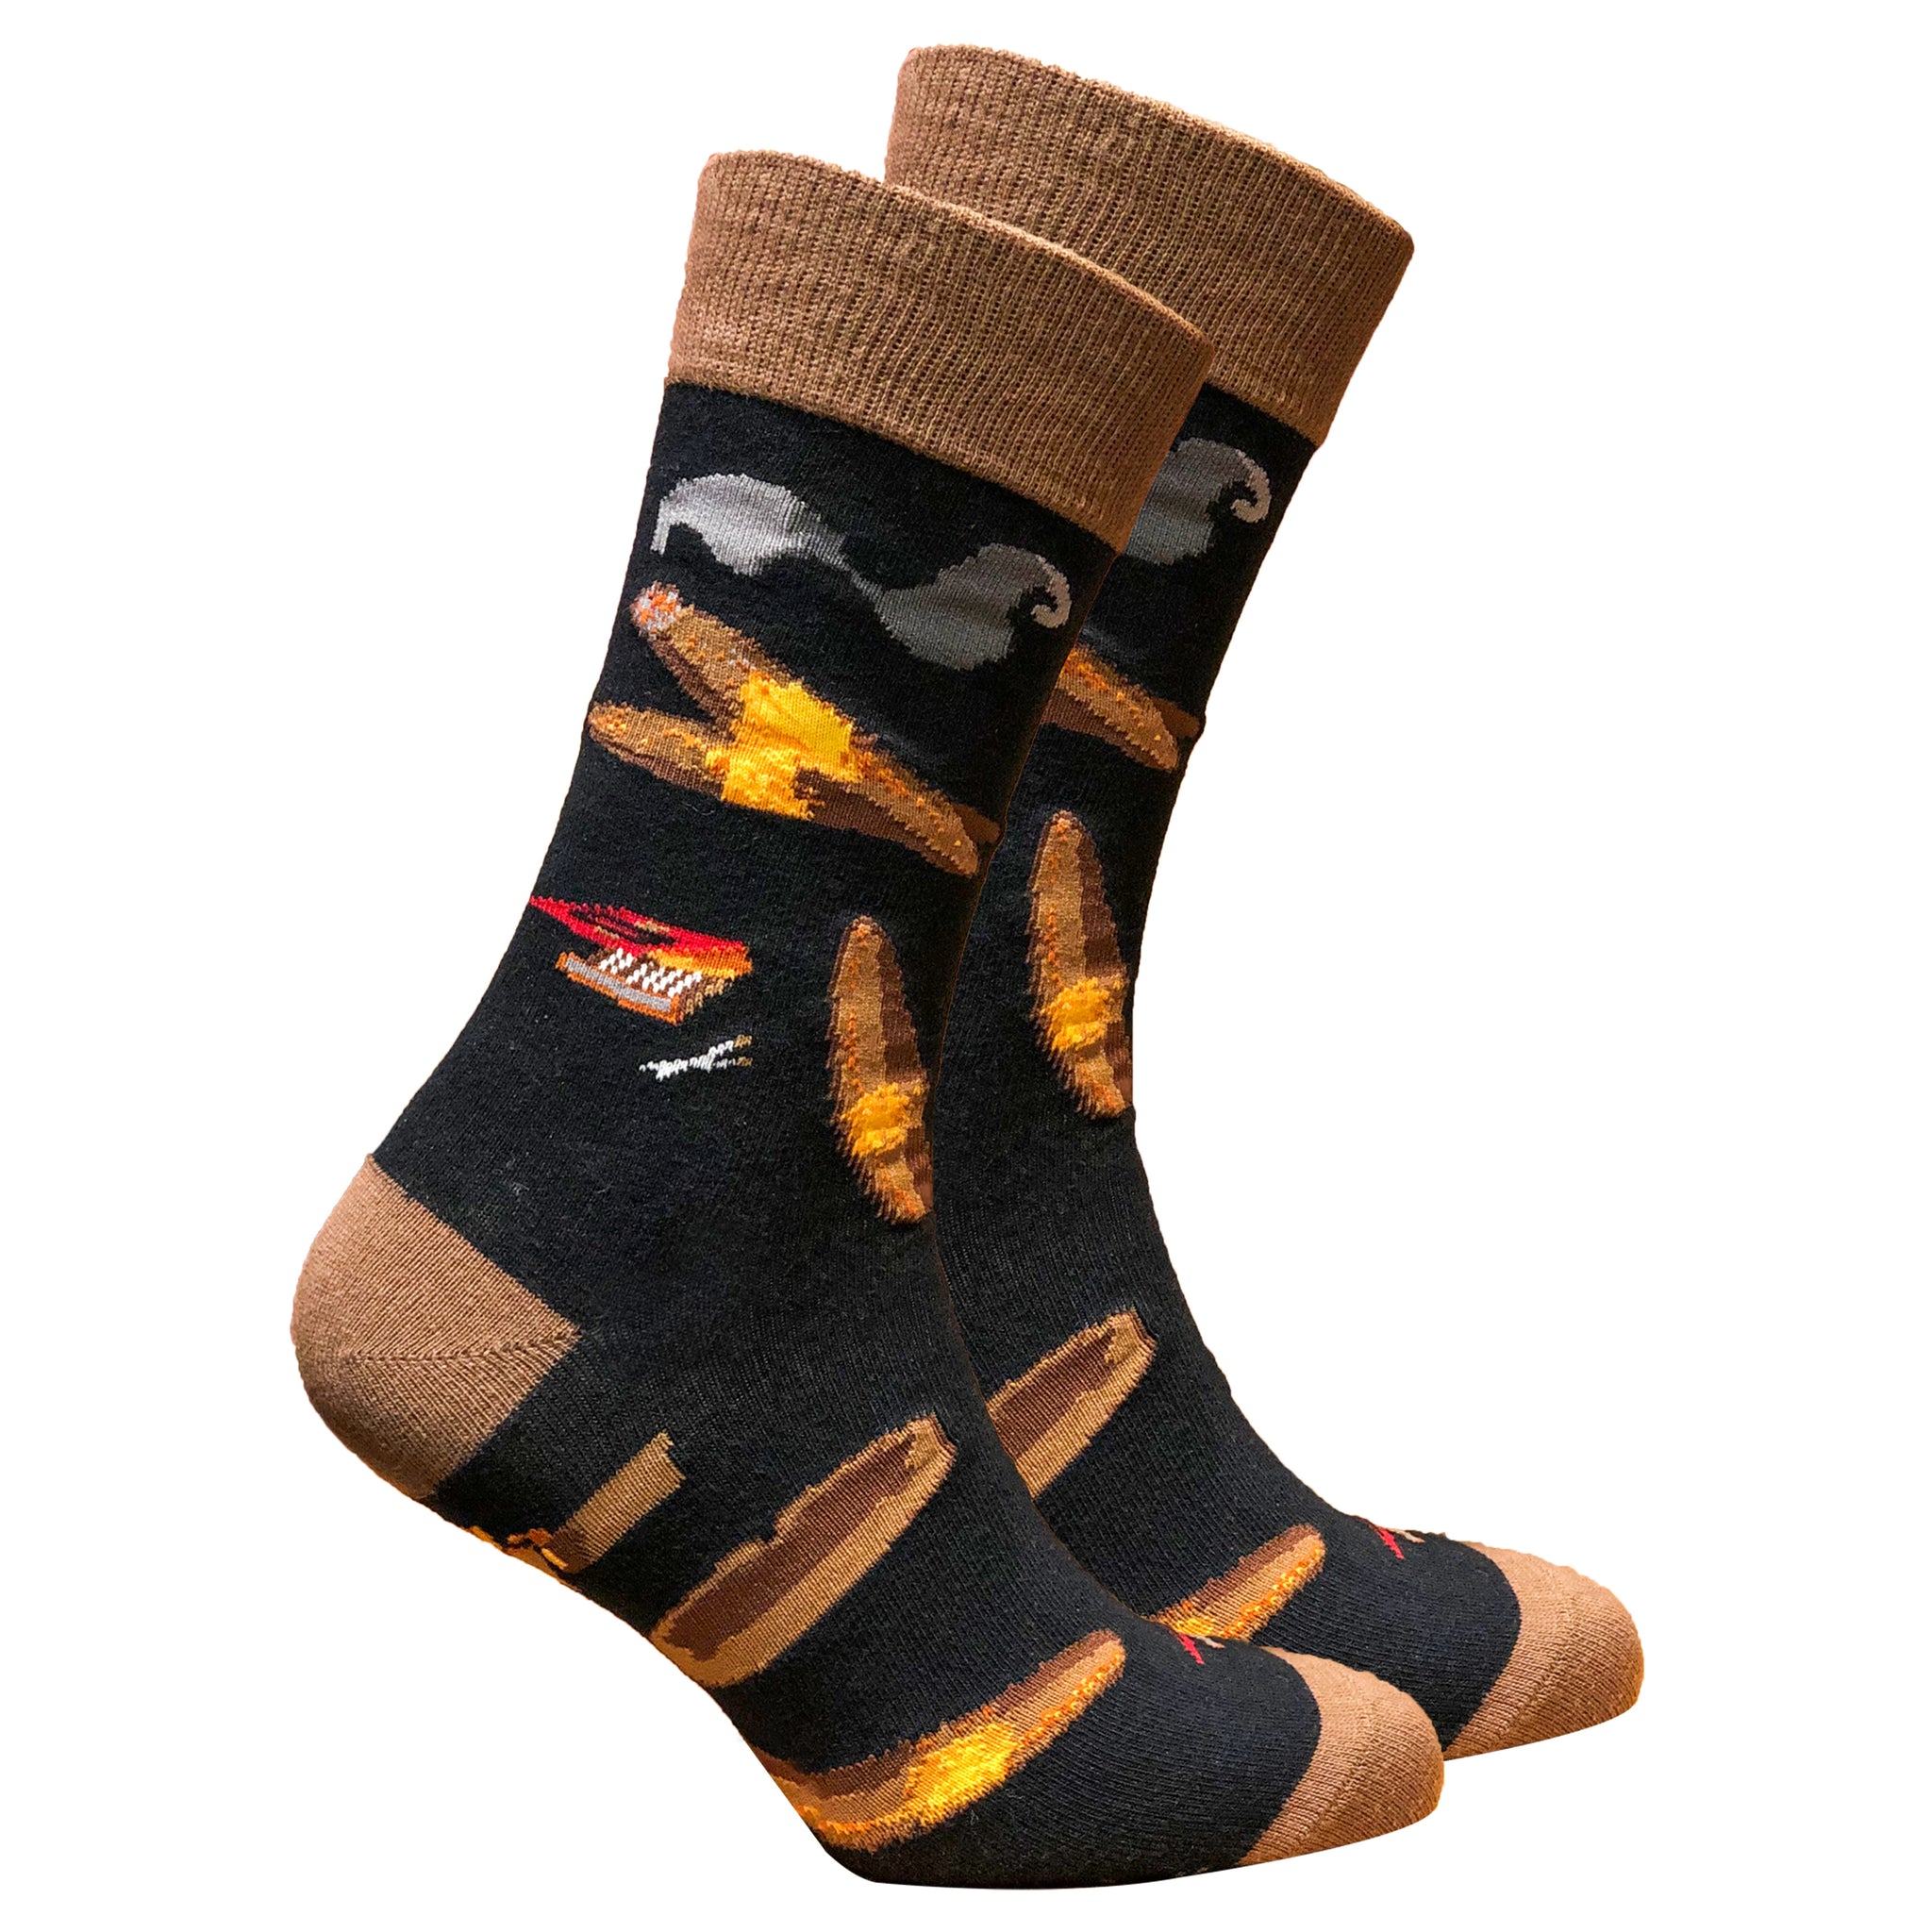 Men's Cigar Socks - Socks n Socks